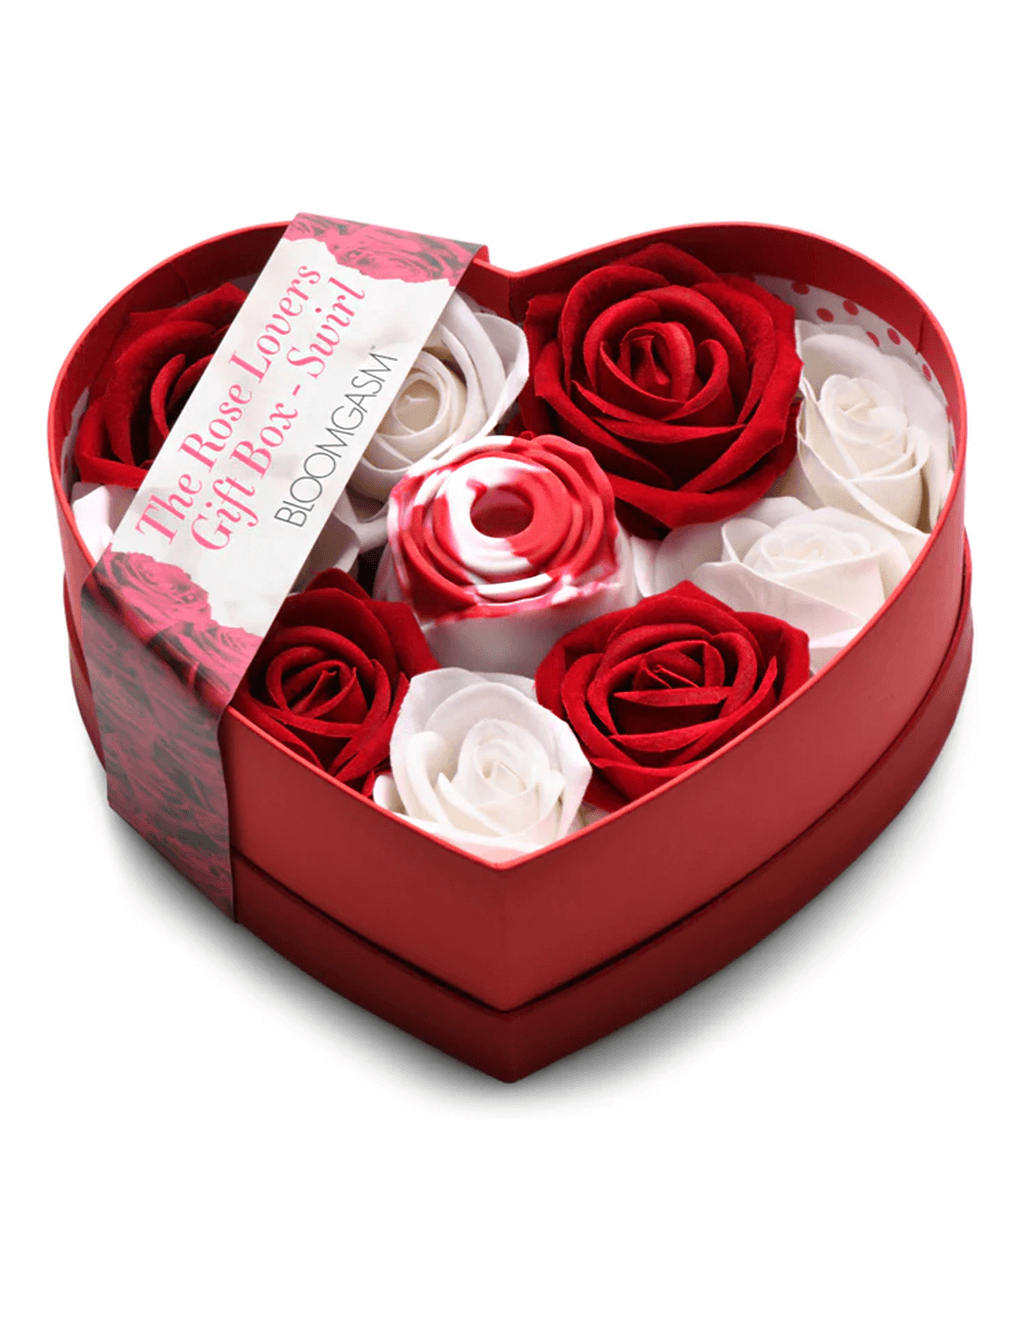 Bloomgasm Rose Lover's Gift Box - Swirl - Box